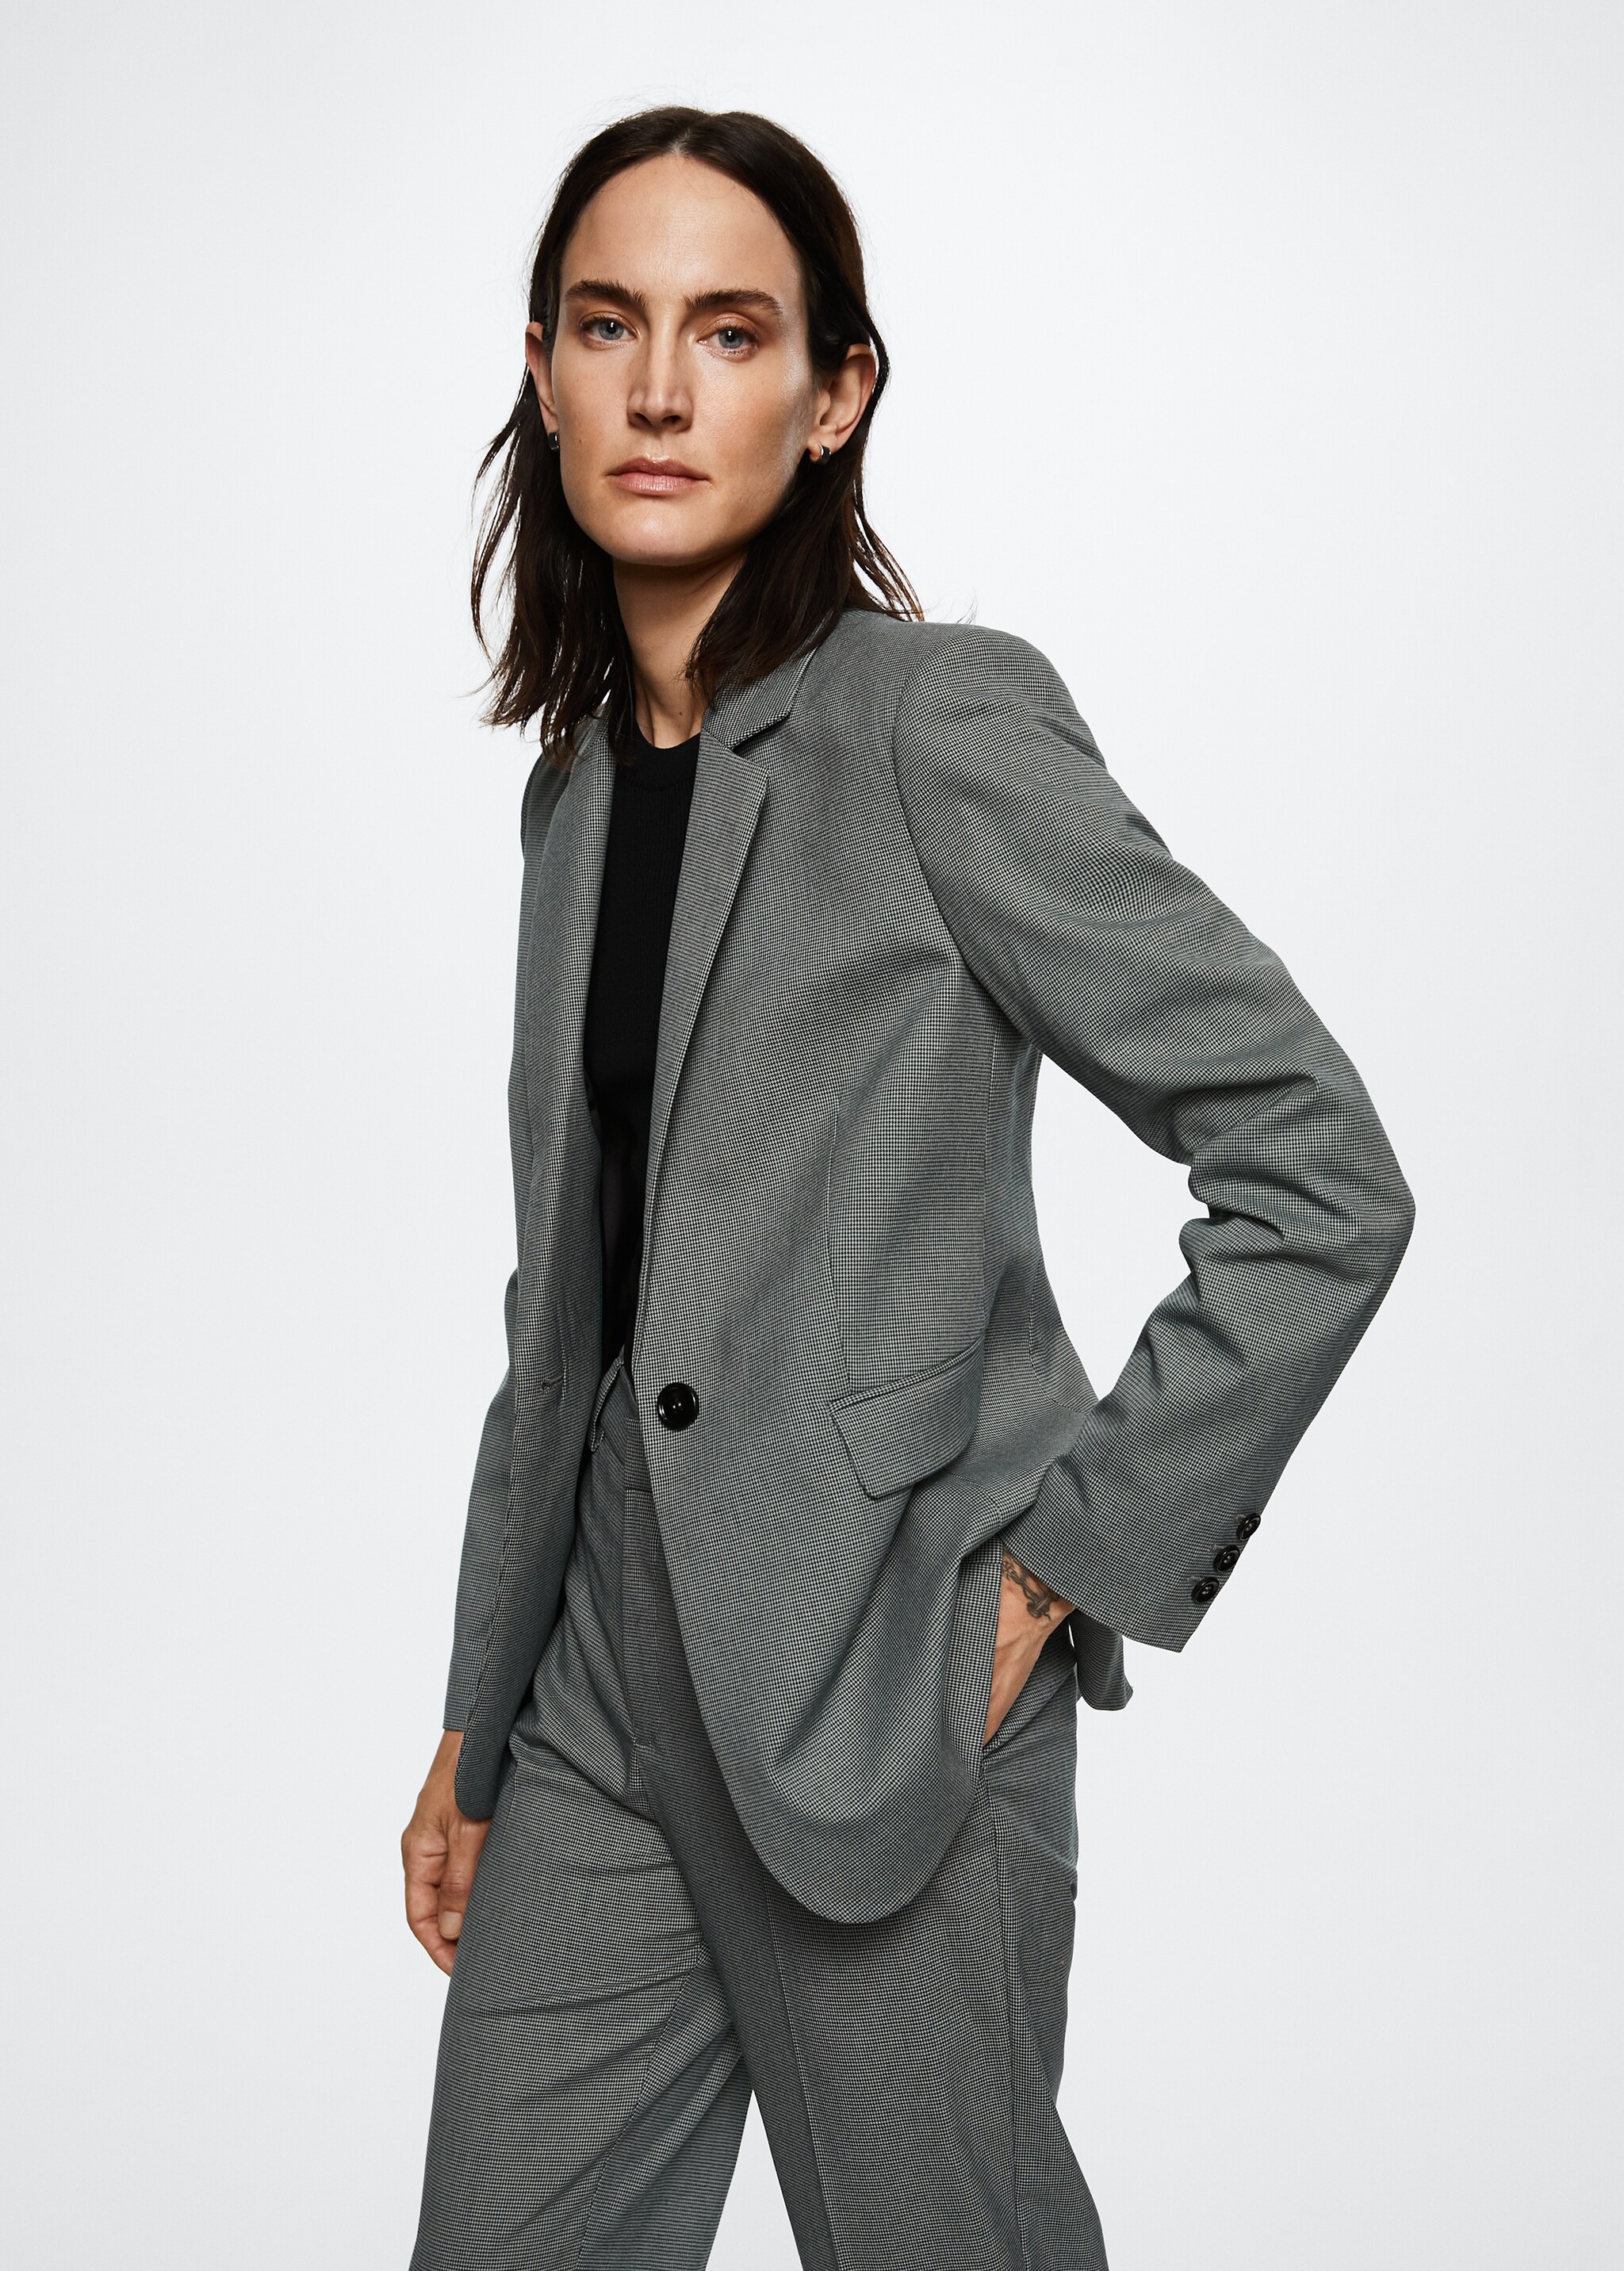 Patterned suit blazer - Medium plane